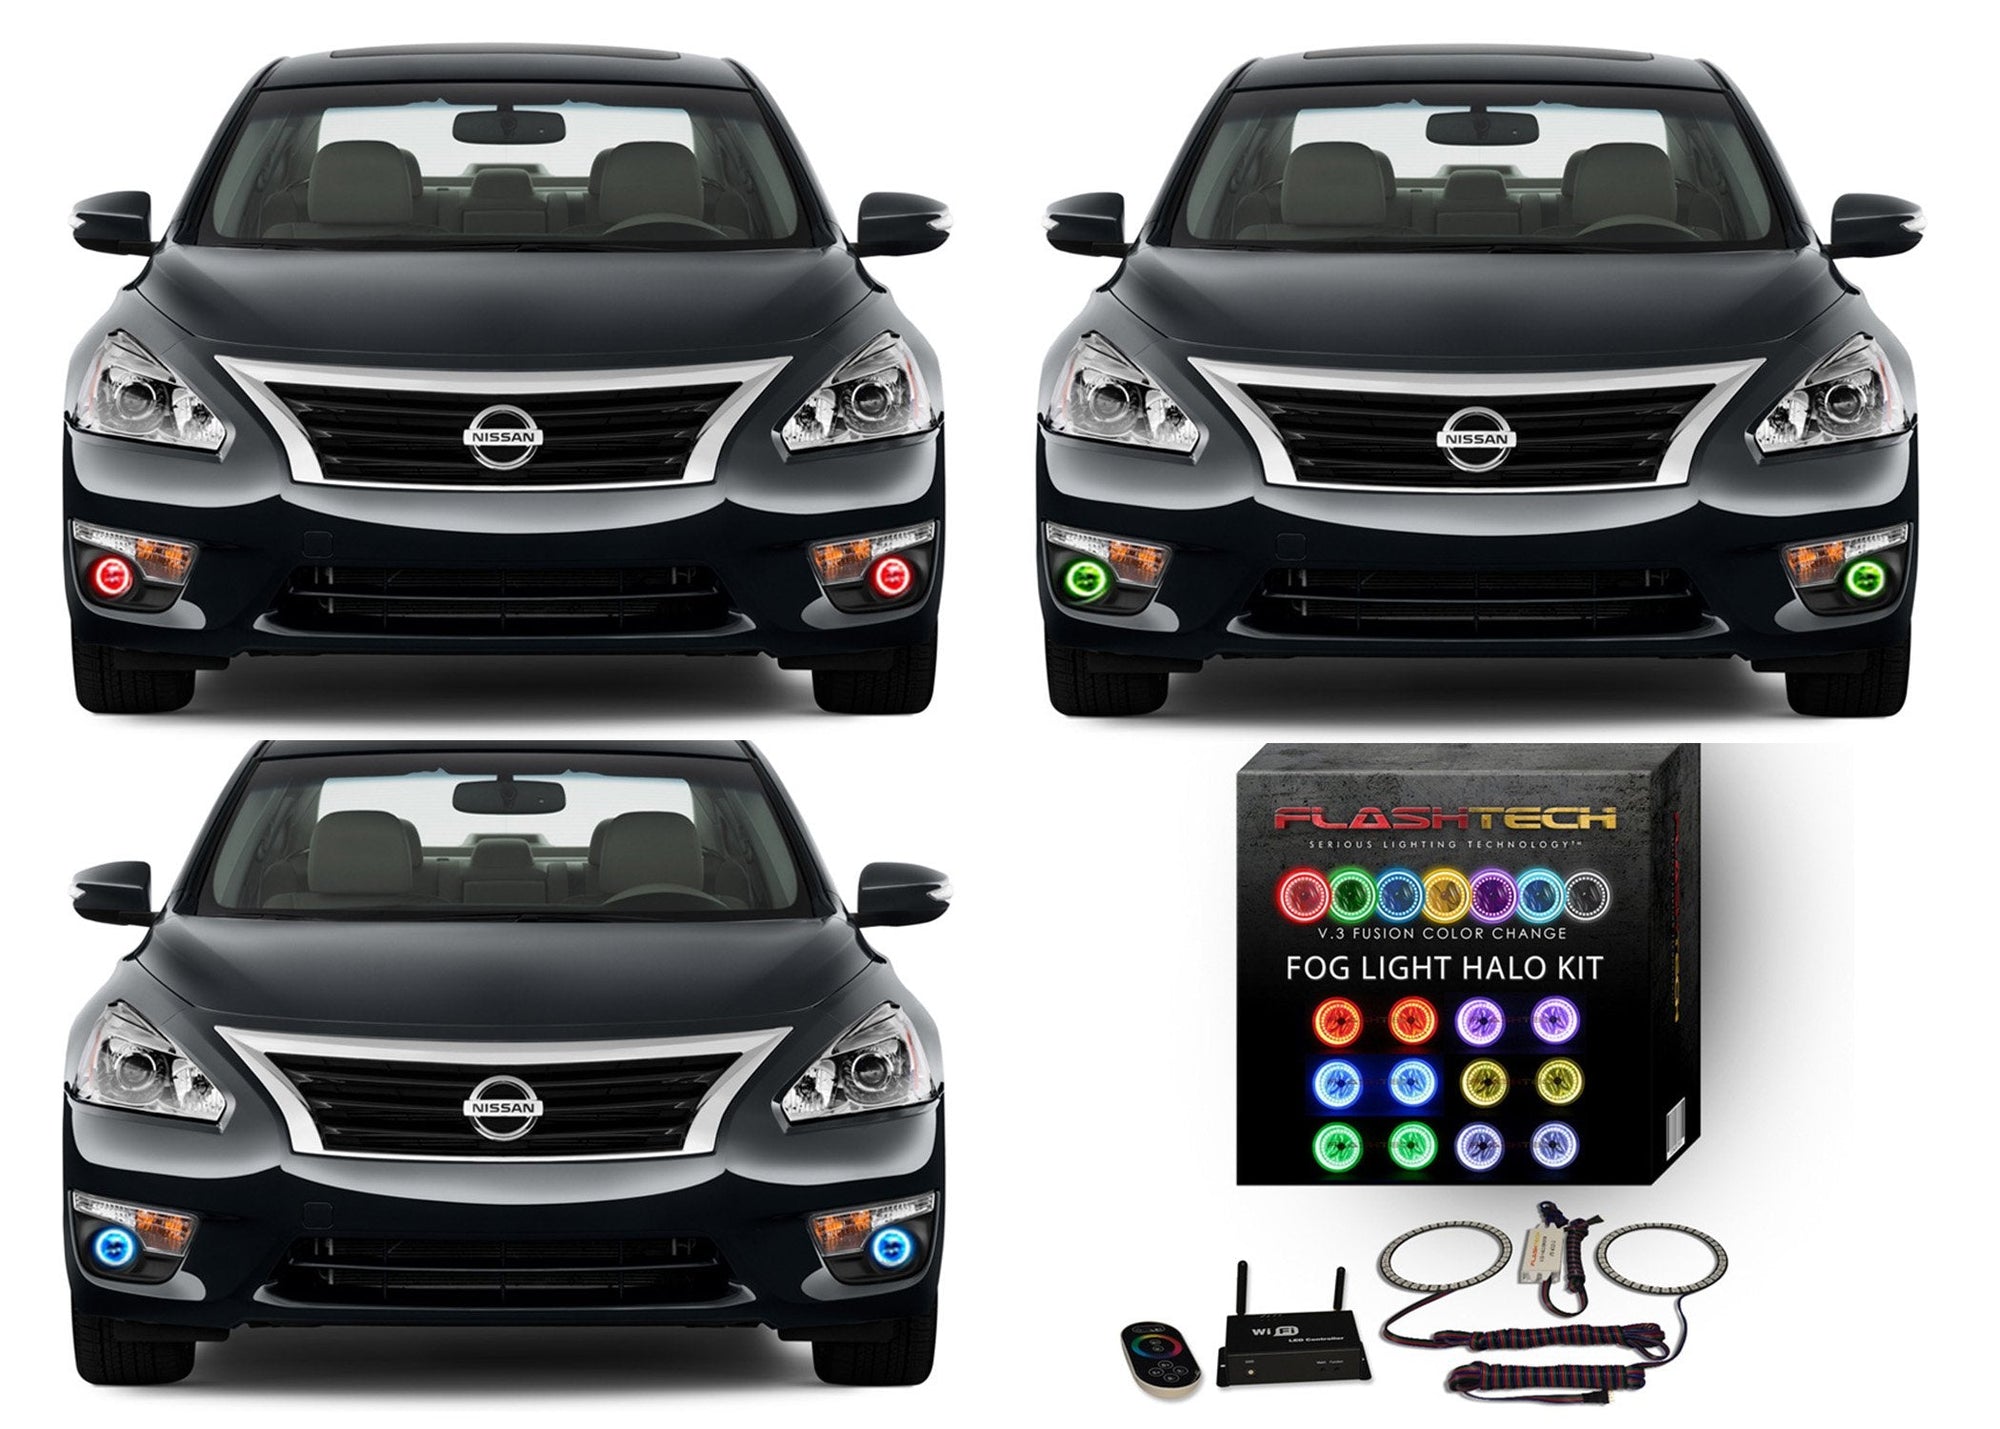 Nissan-Altima-2013, 2014, 2015-LED-Halo-Fog Lights-RGB-WiFi Remote-NI-ALS1315-V3FWI